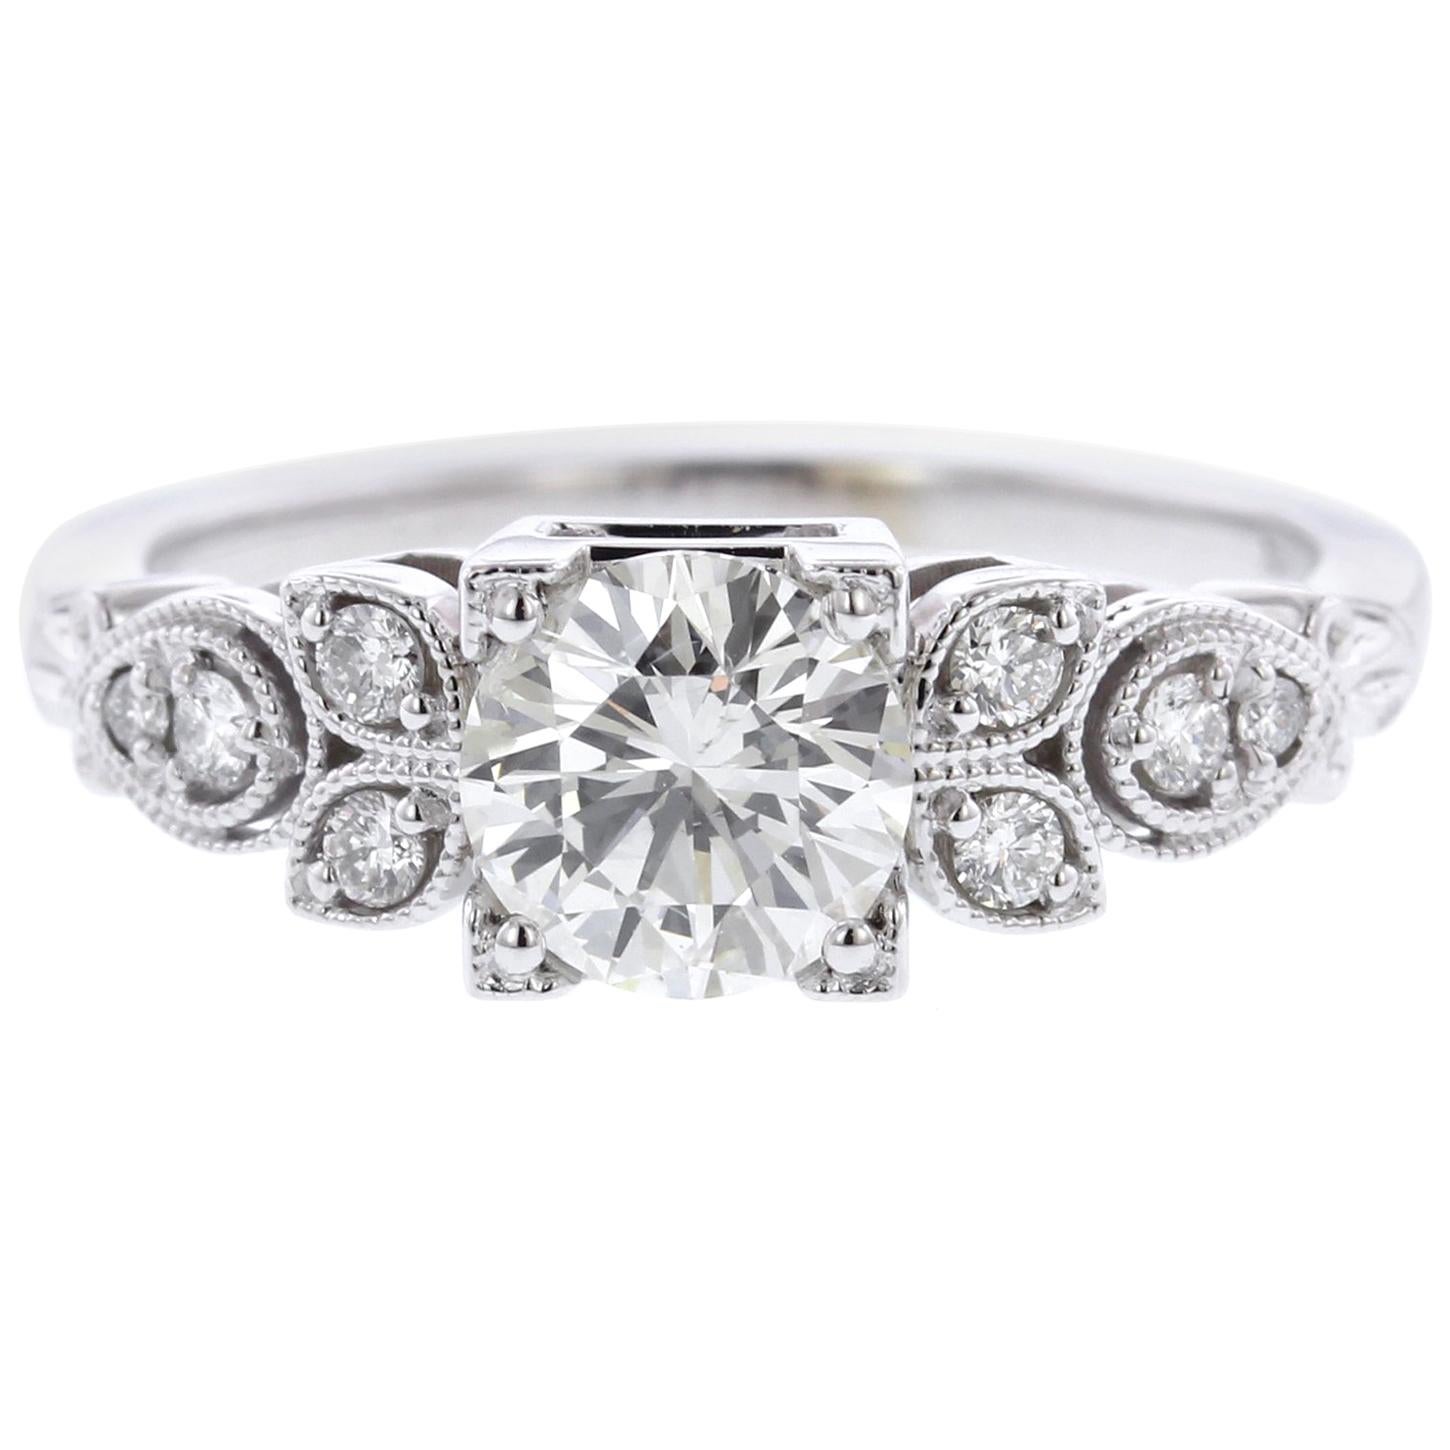 Vintage Style 14 Karat White Gold Diamond Engagement Ring